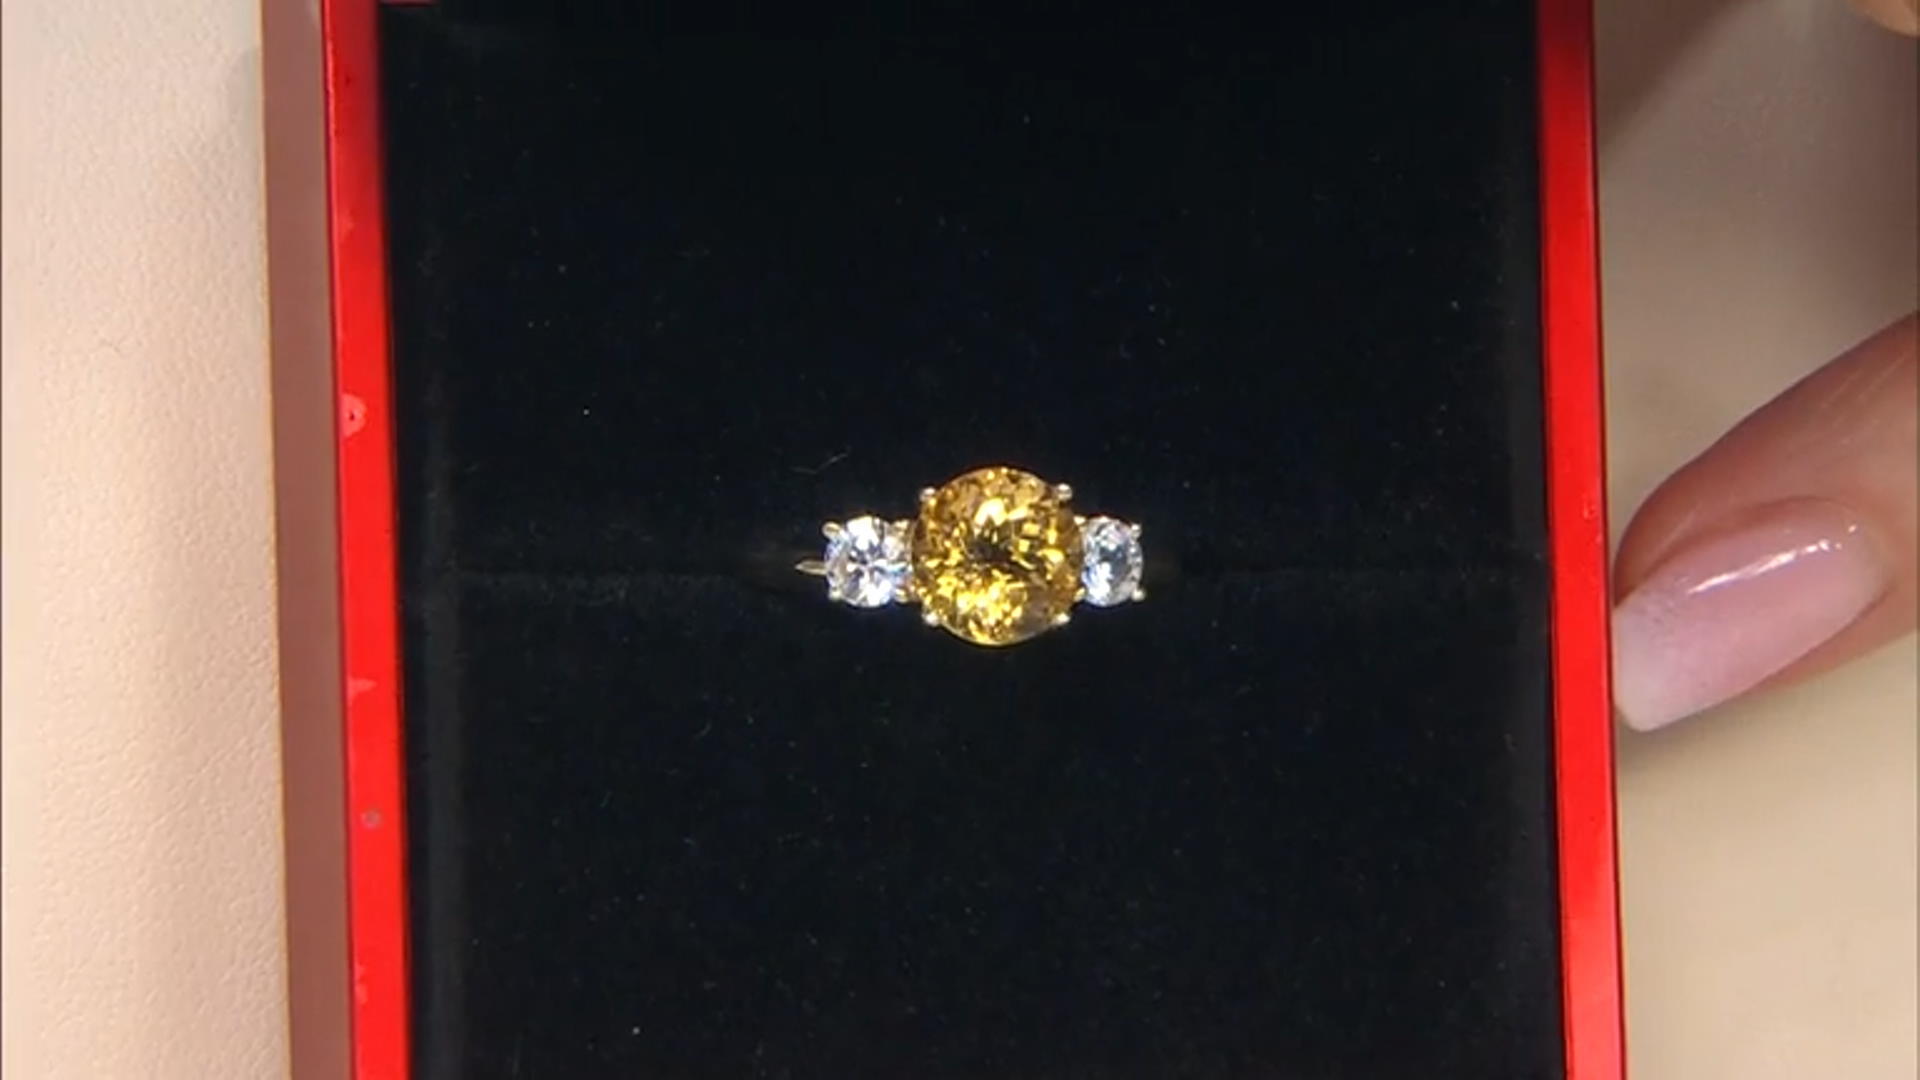 Yellow Beryl With White Zircon 10k Yellow Gold Ring 2.68ctw Video Thumbnail